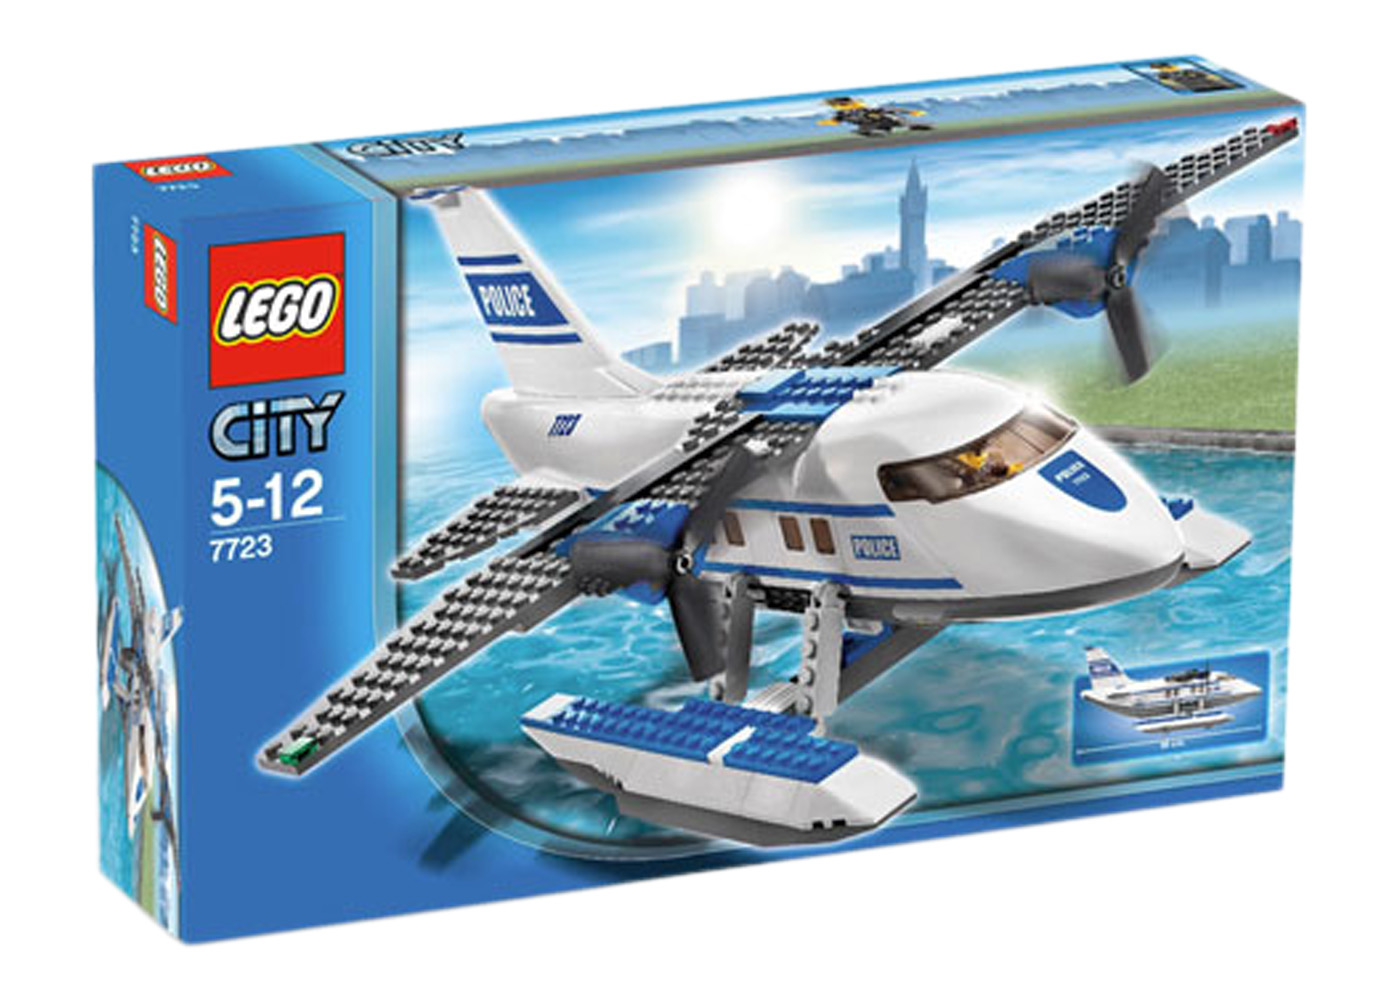 LEGO City Police Pontoon Plane Set 7723